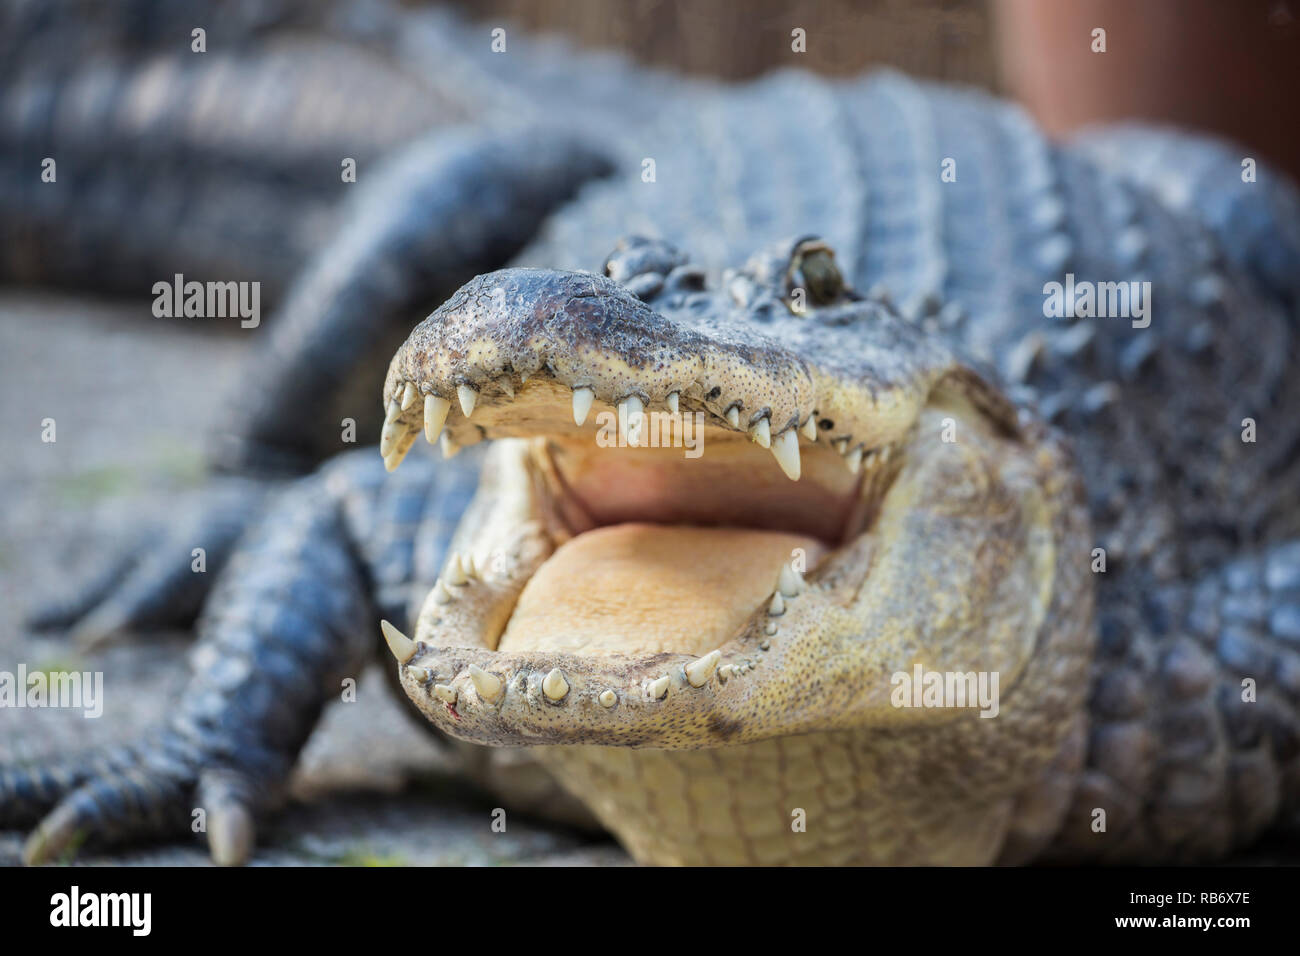 The Netherlands, Amsterdam, Alligator held as pet Stock Photo - Alamy